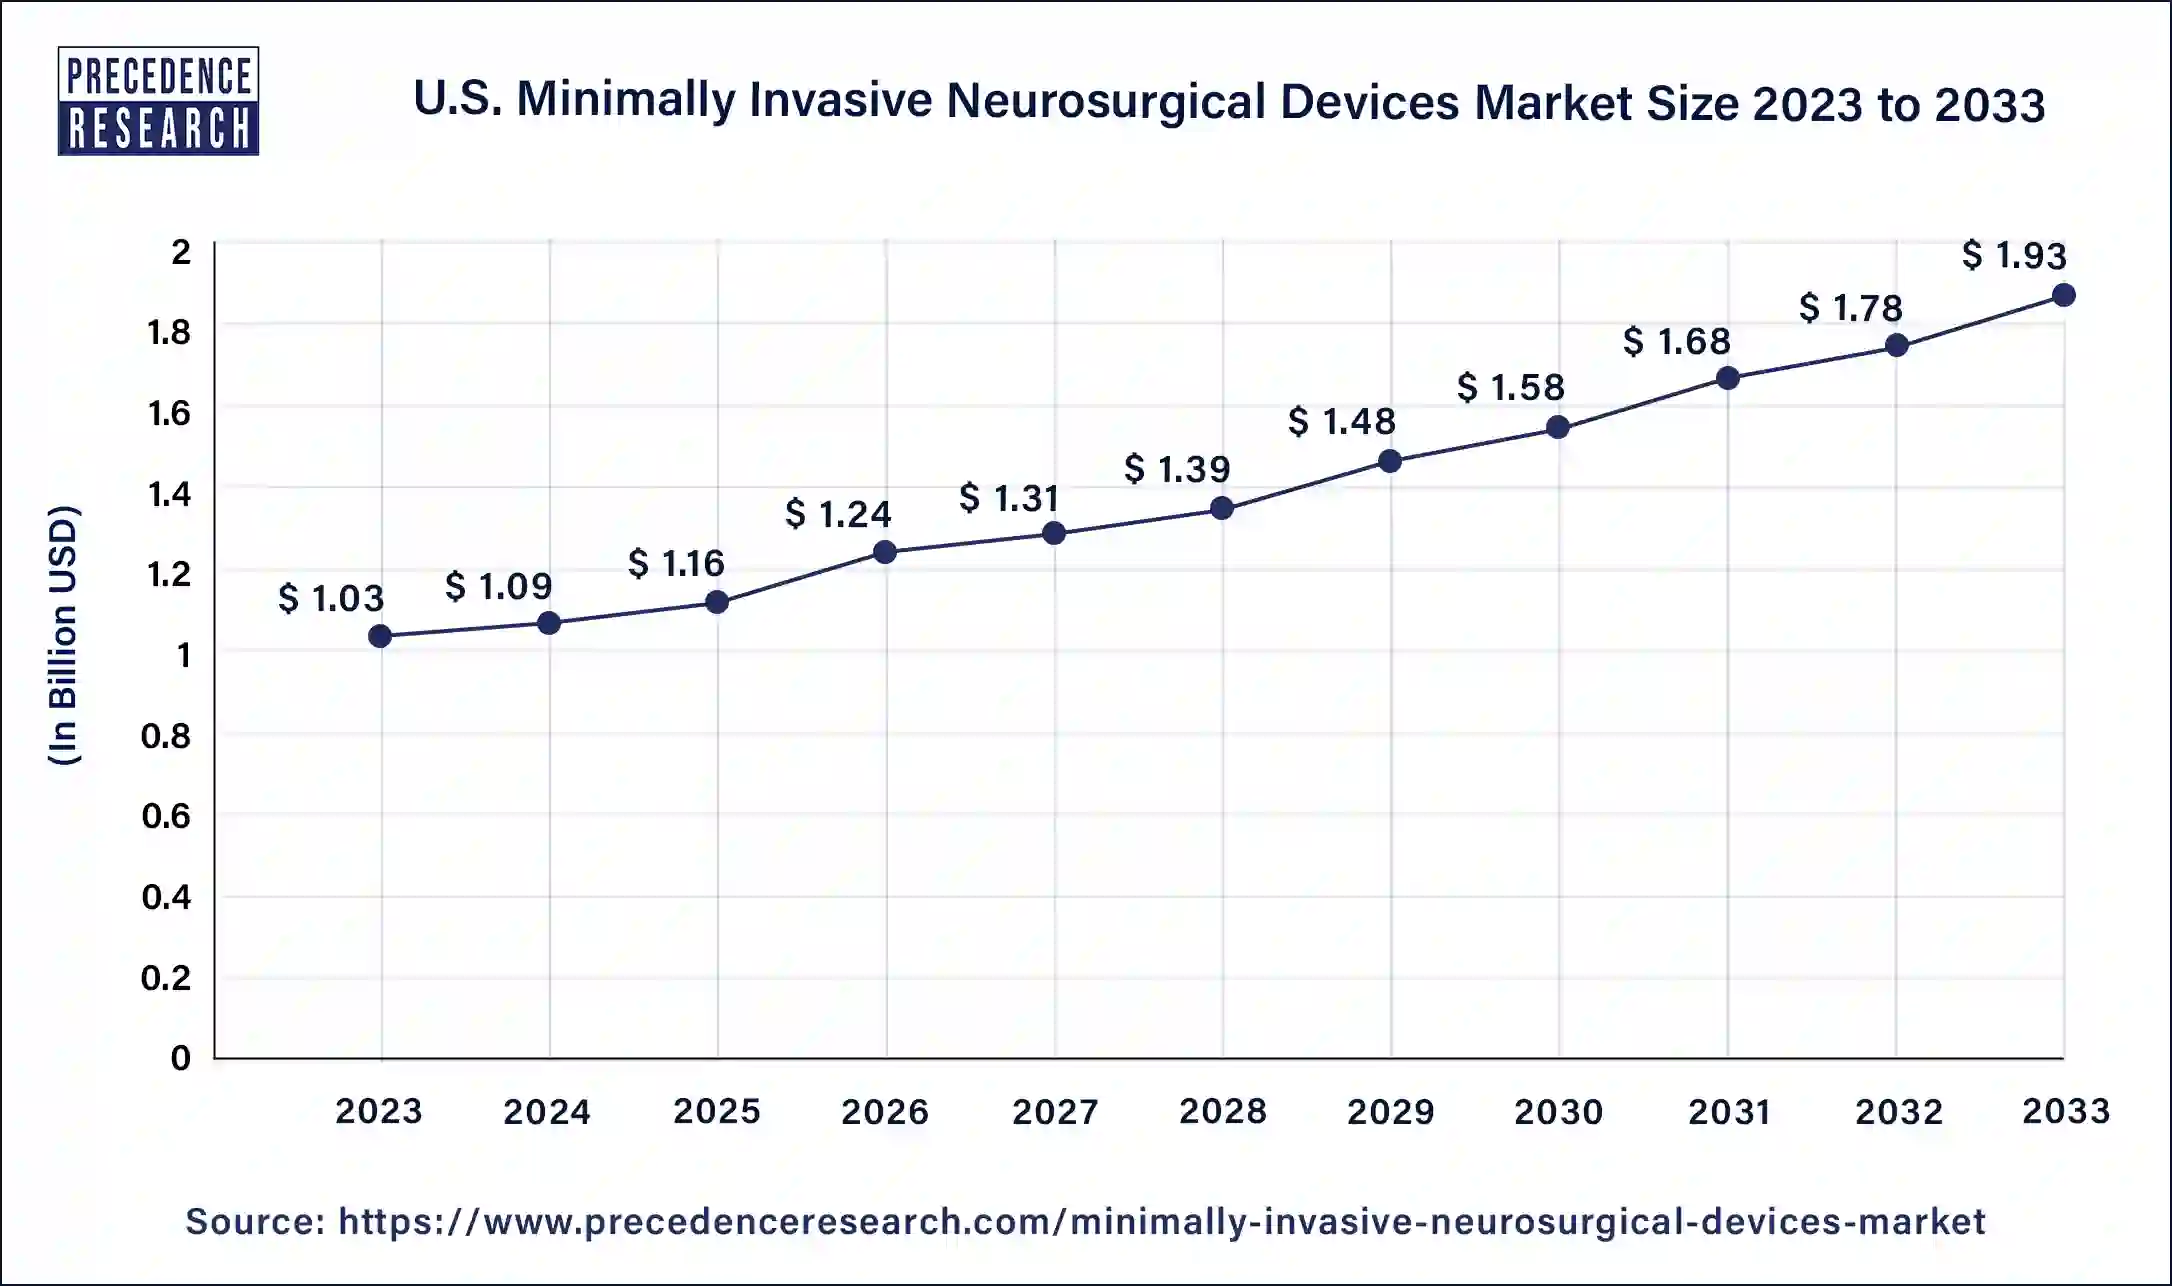 U.S. Minimally Invasive Neurosurgical Devices Market Size 2024 to 2033